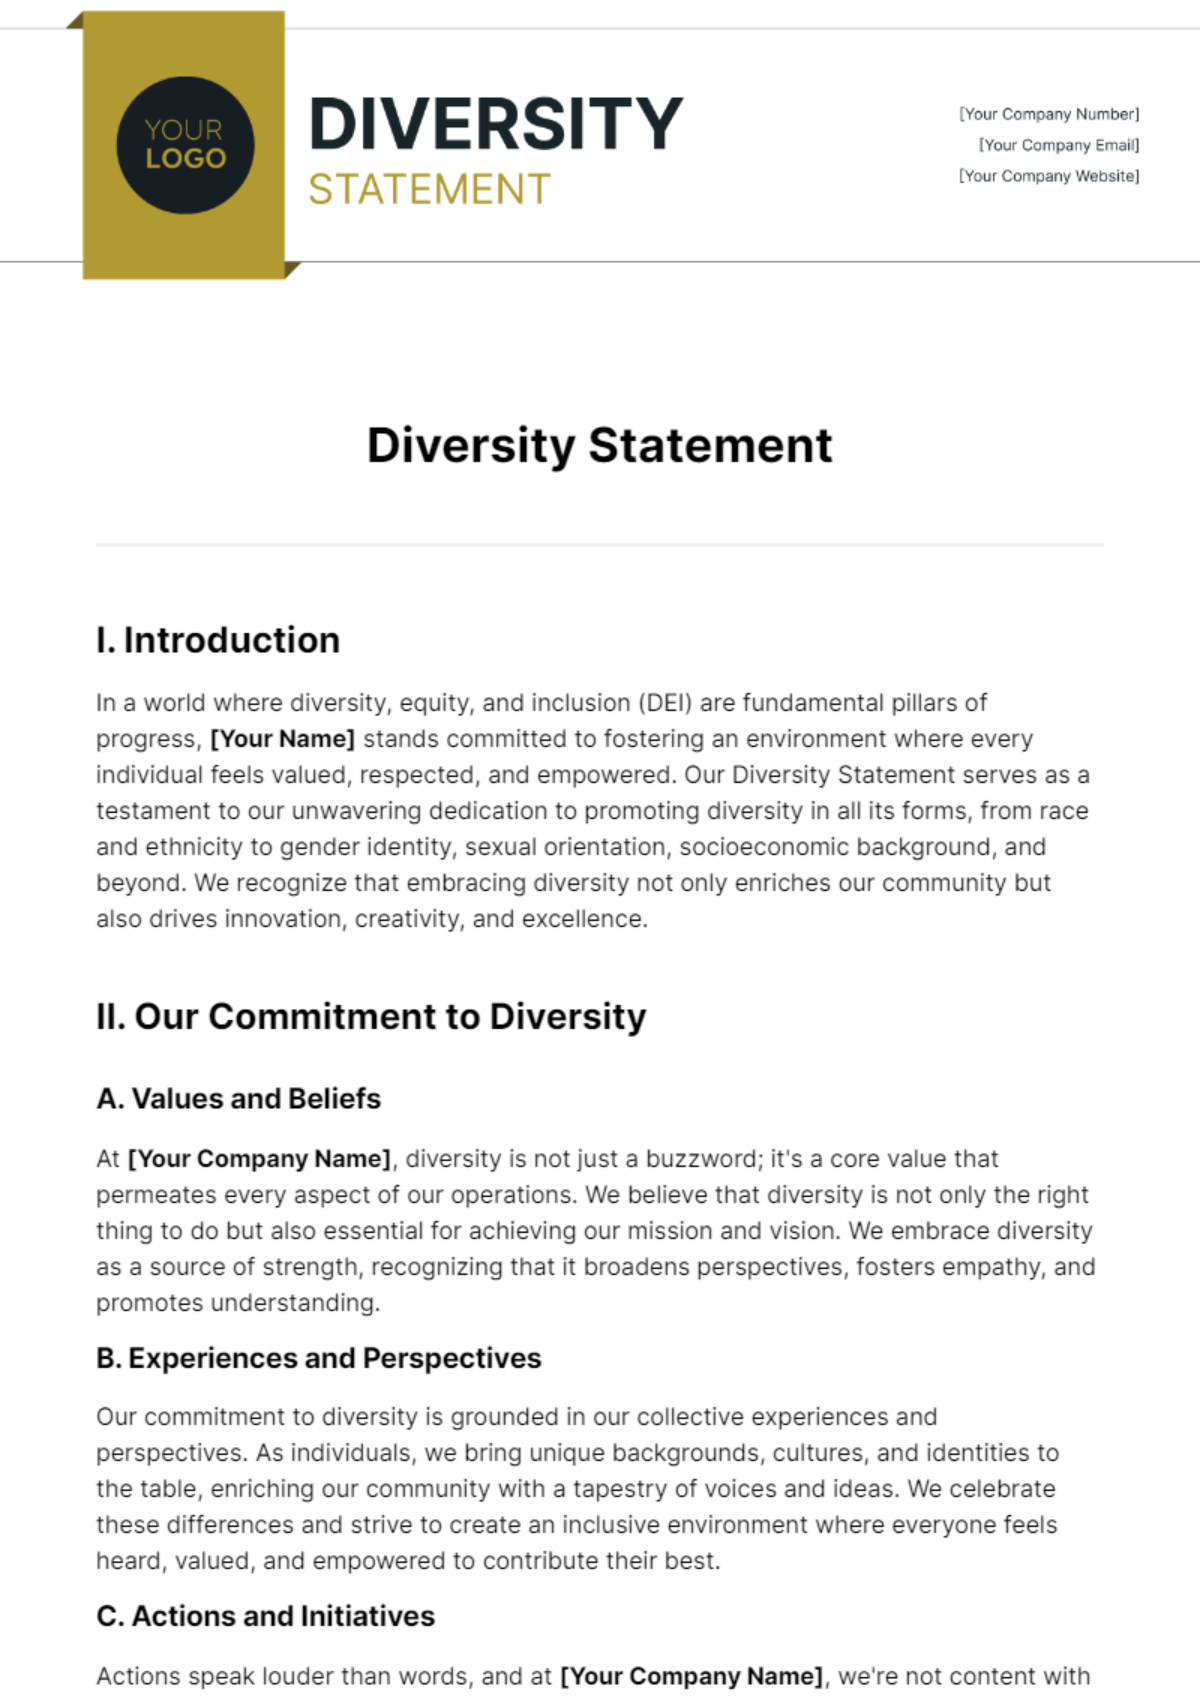 Free Diversity Statement Template